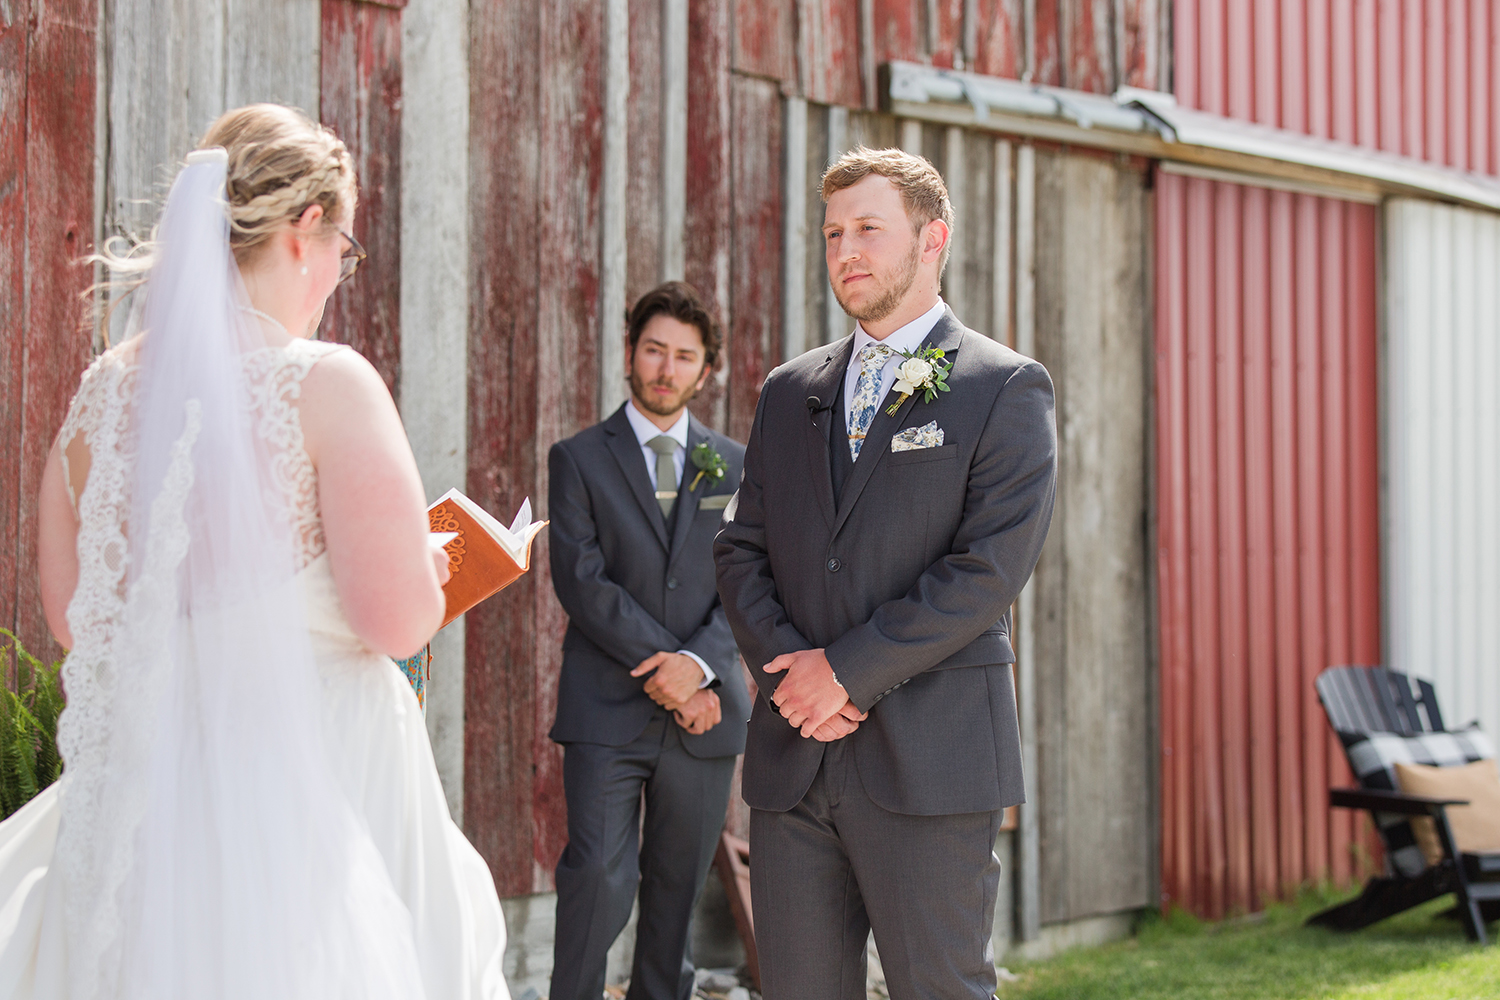 Intimate Michigan Barn Wedding The Red Shed Something Blue Weddings Blog